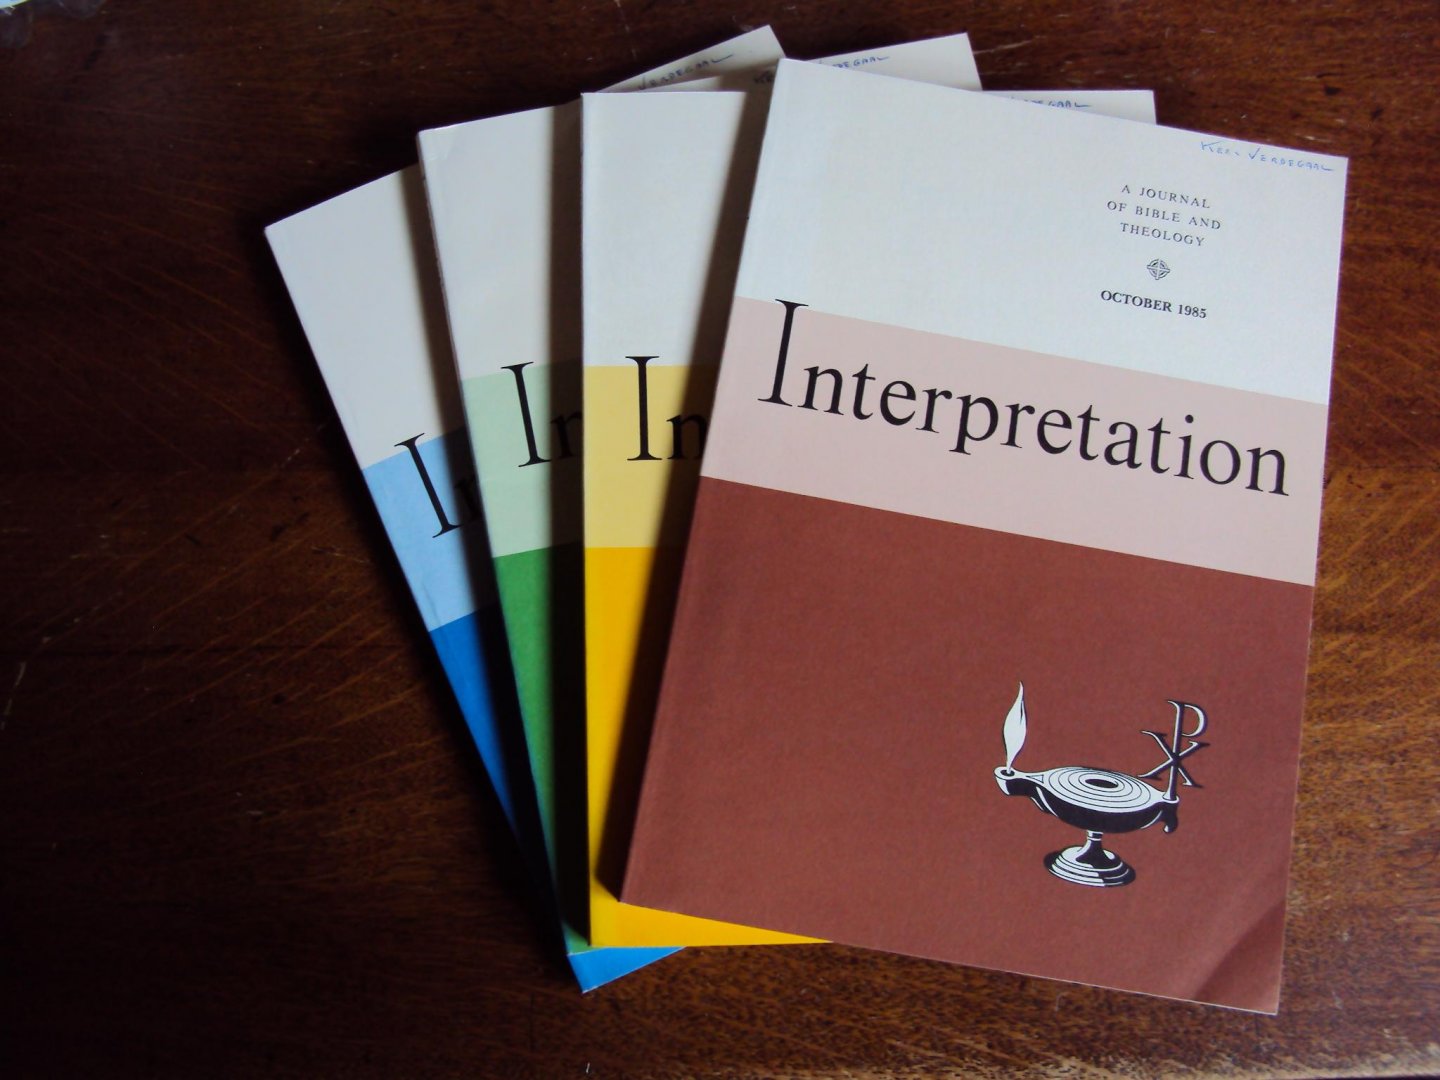  - Interpretation. A Journal of Bible and Theology, Vol. XXXIX nos. 1-4